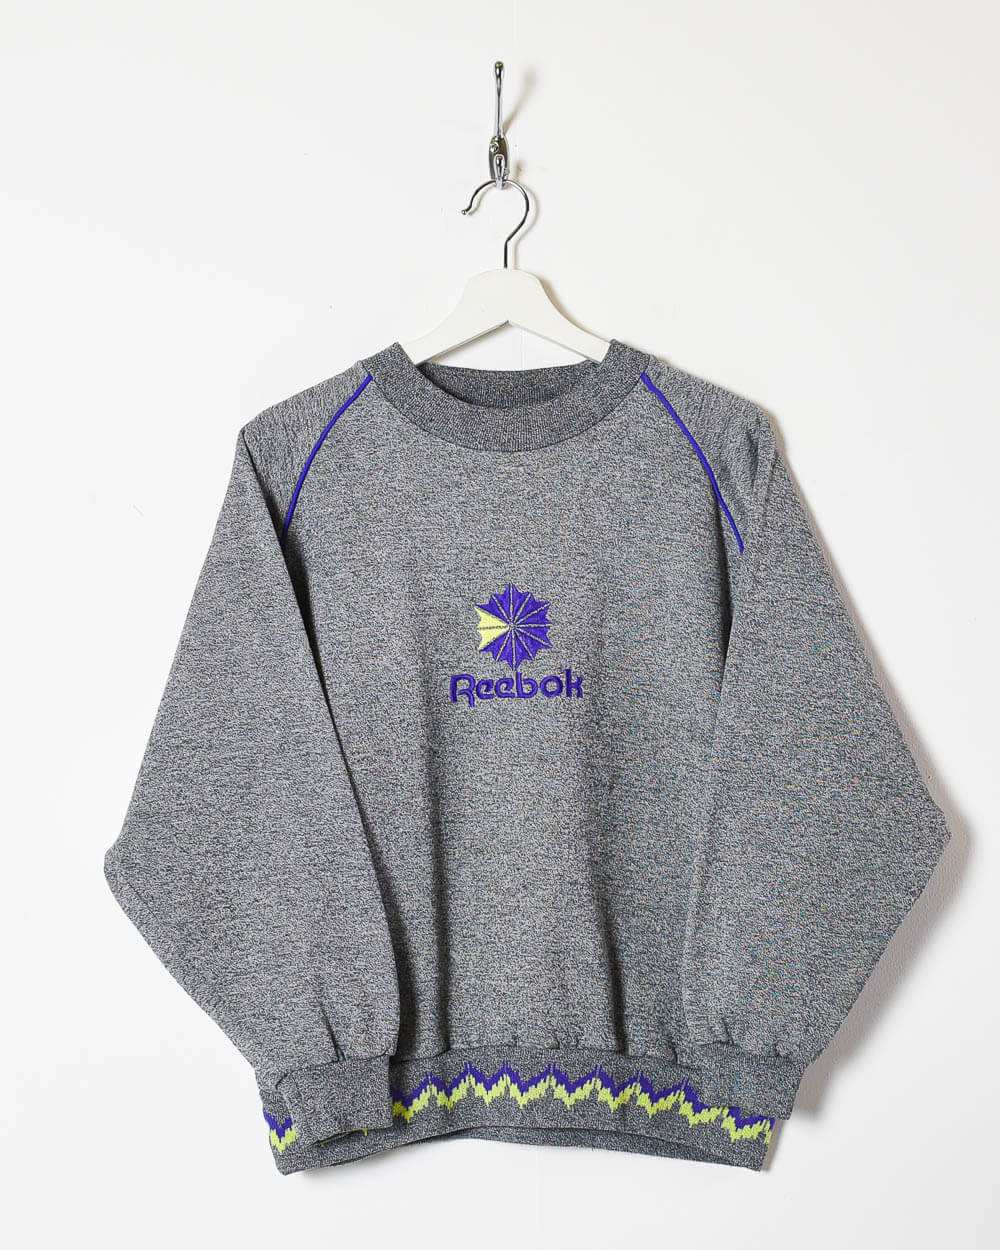 Grey Reebok Women's Sweatshirt - Large